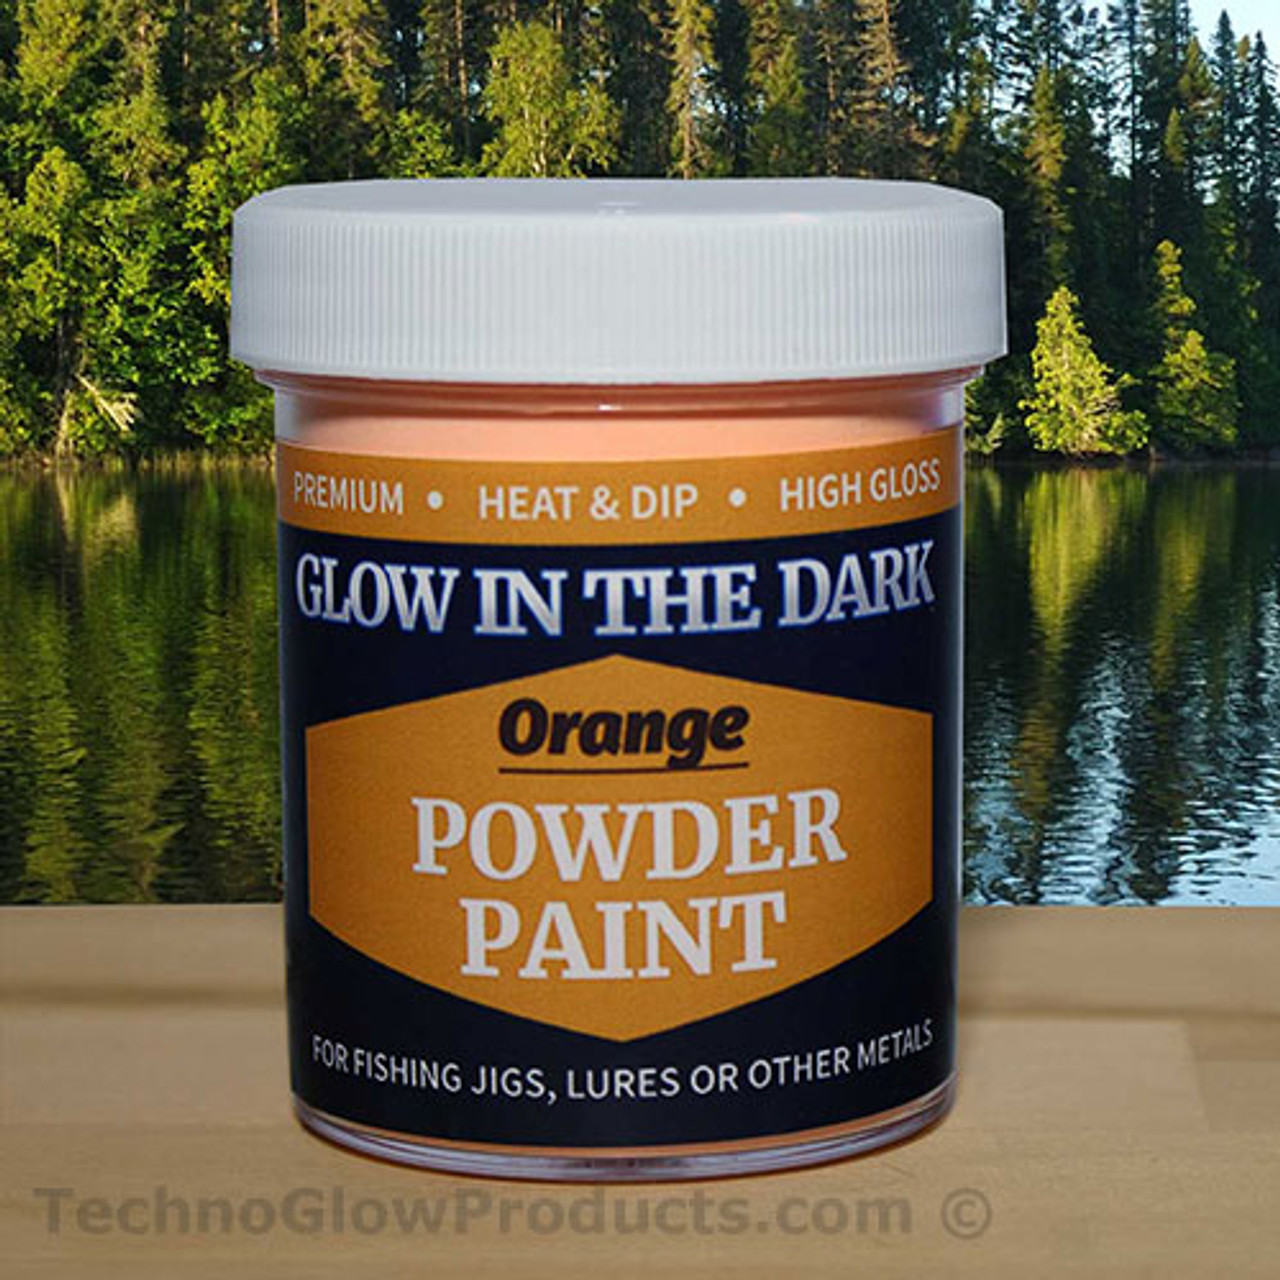 Glow in the Dark Powder Paint